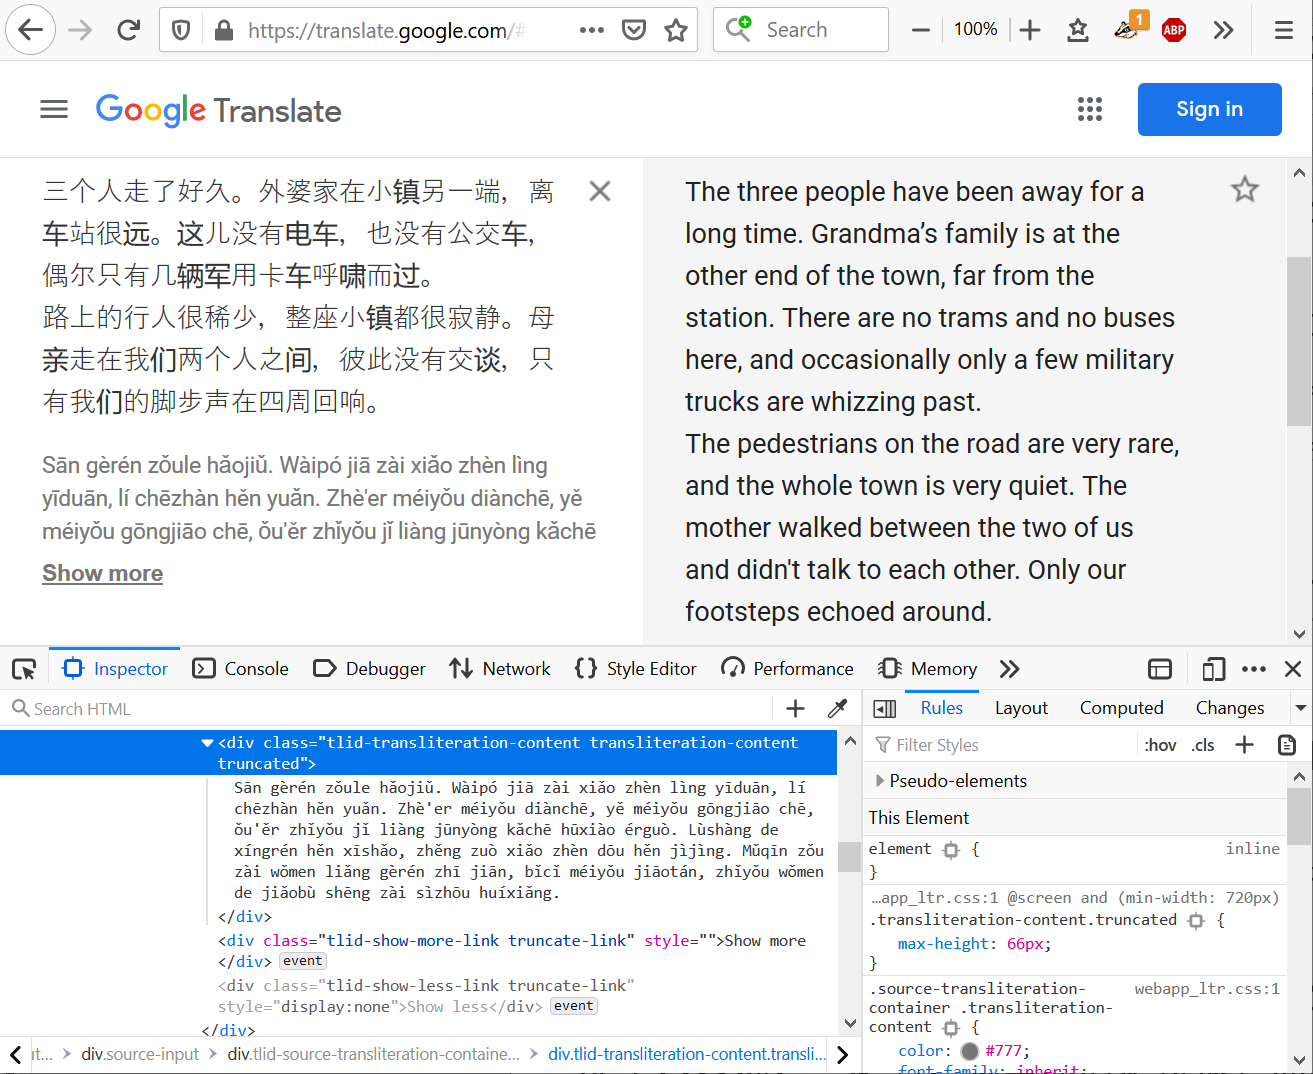 Pinyin transcription in Google MT